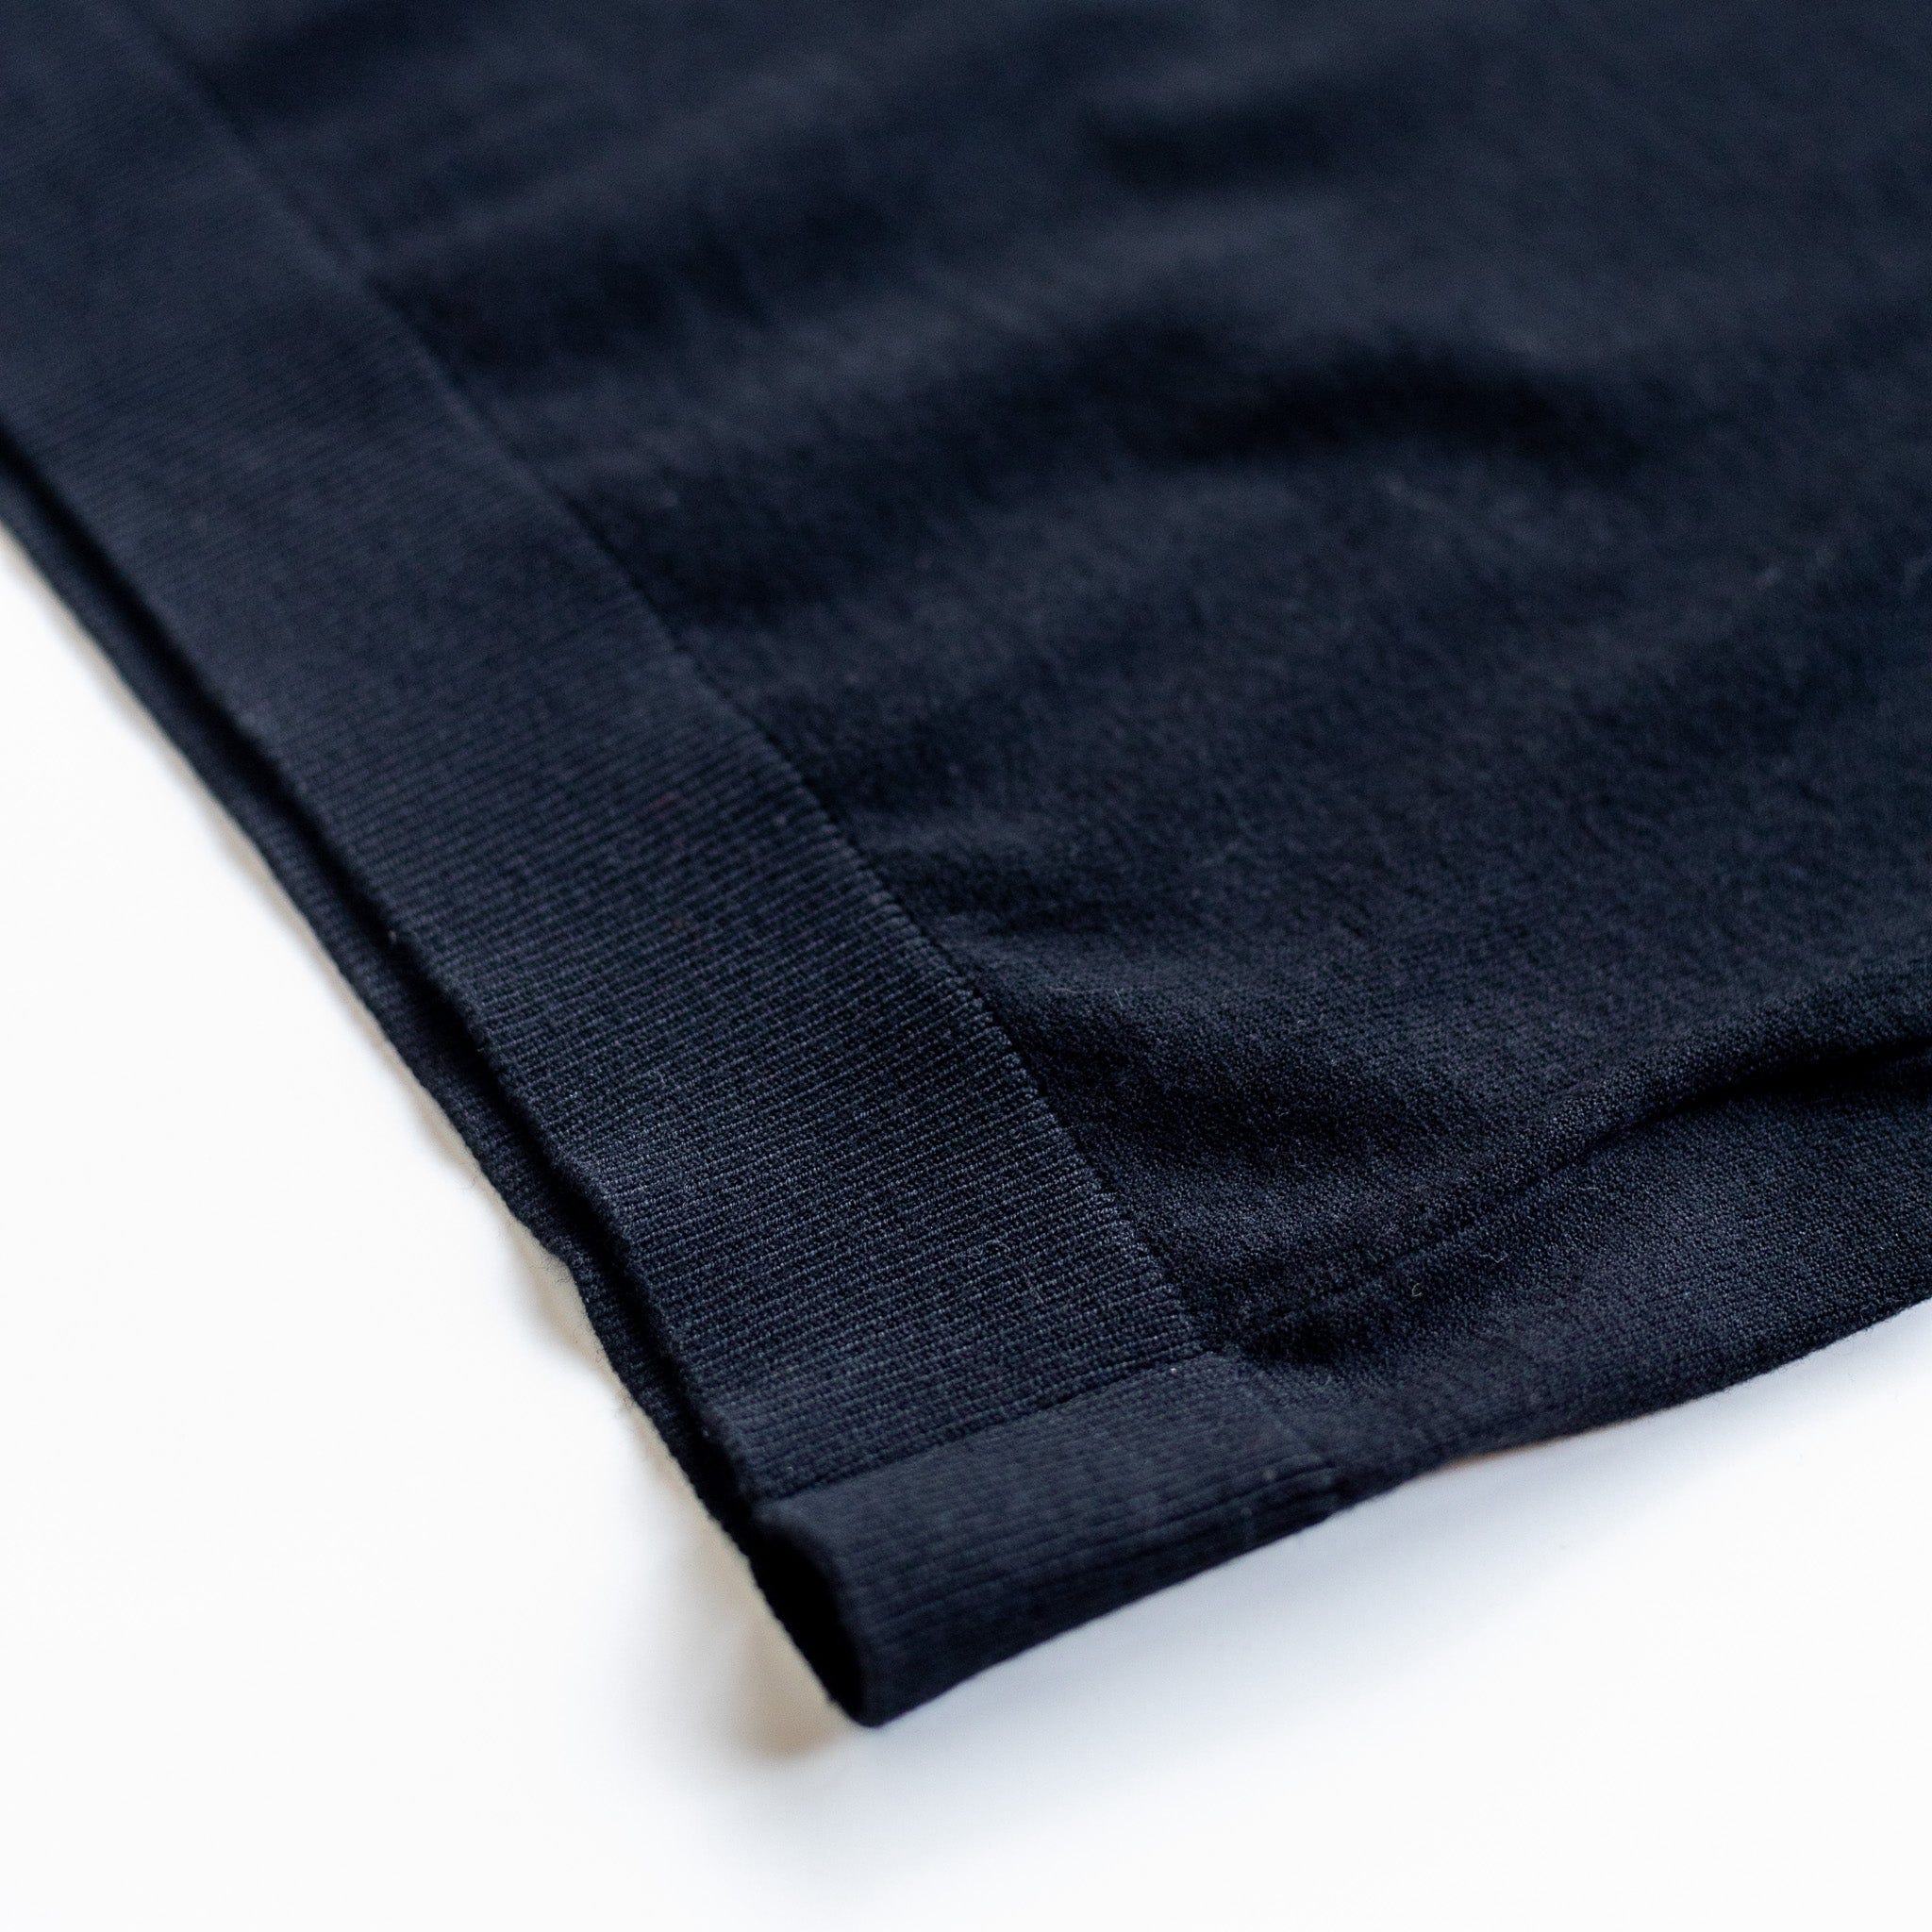 GTSC Knit Polo Shirts Canada-Golf-Lifestyle-Clothing-Brand